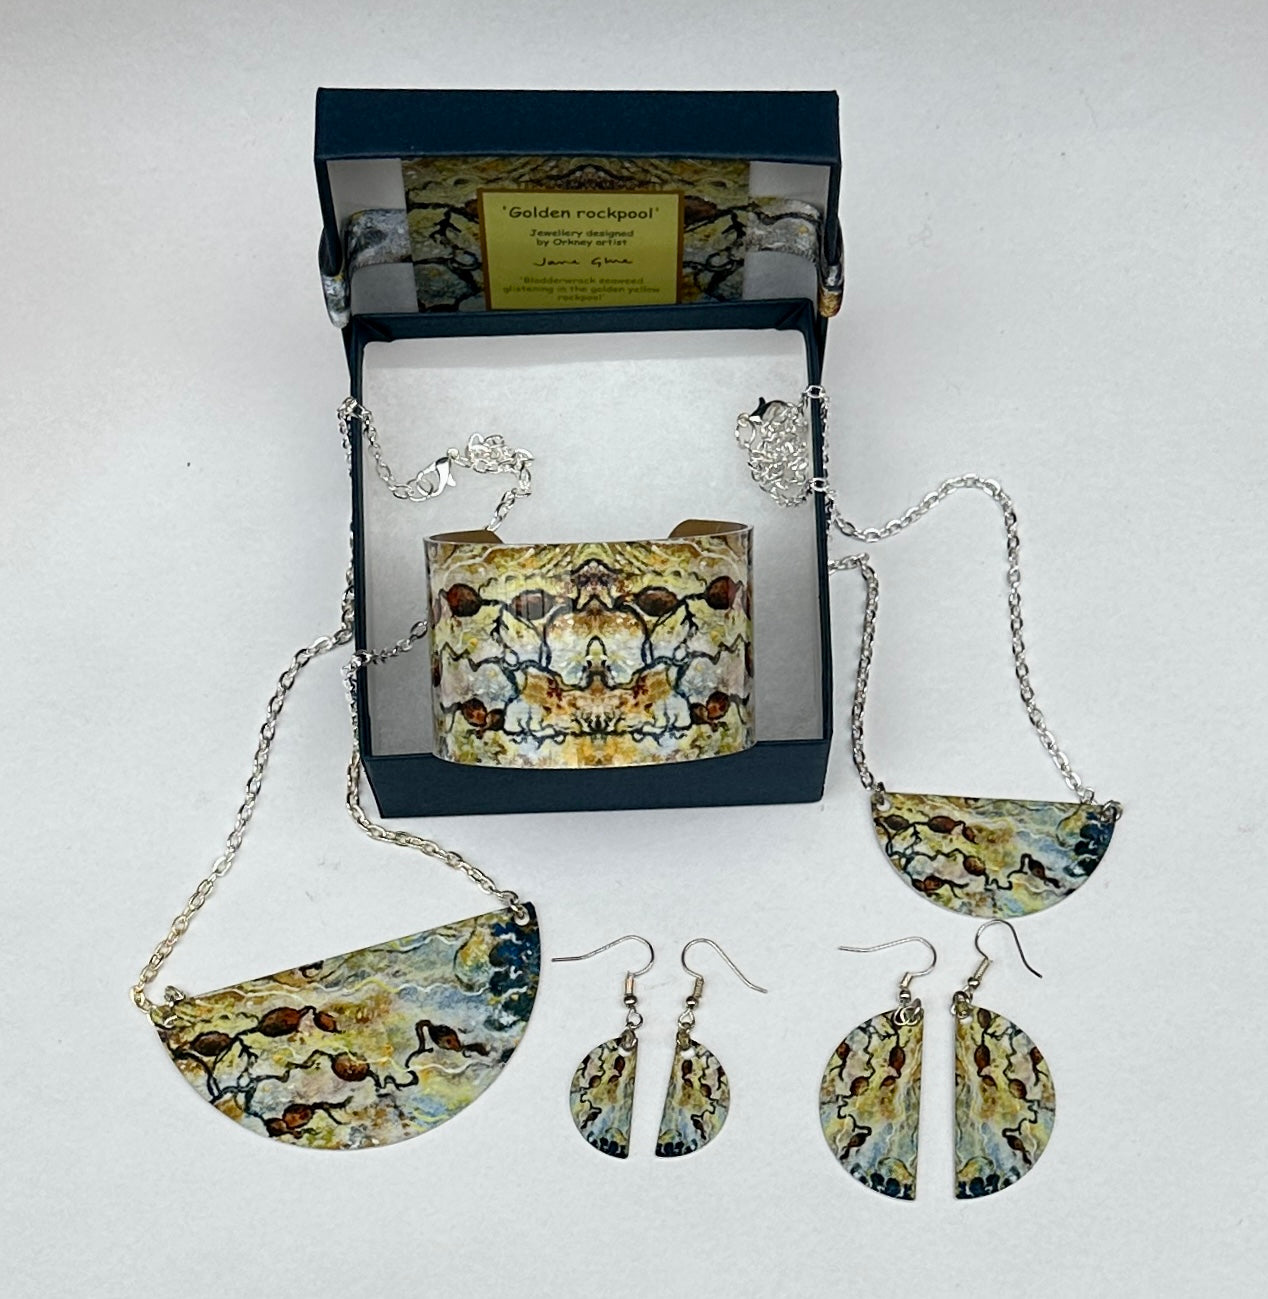 Jewellery by Jane Glue, 'Golden rockpool' Pendant/large semi-circle